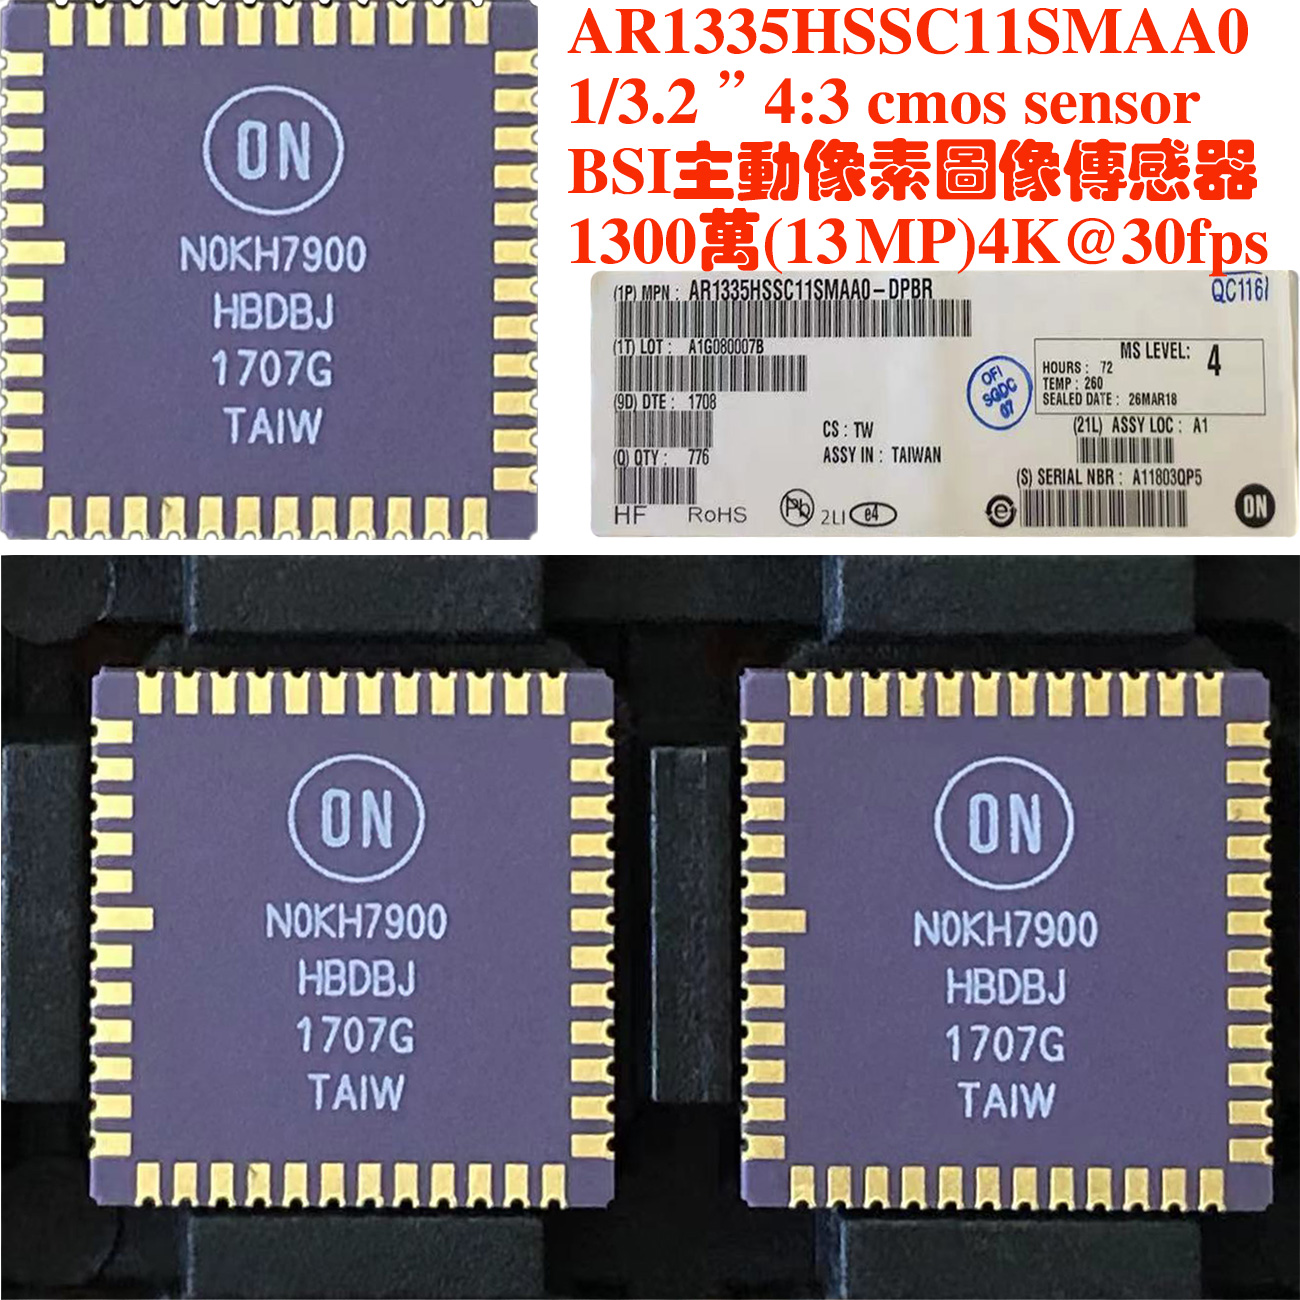 AR1335HSSC11SMAA0，ONSEMI 13MP cmos sensor,GoPro2(狗2)运动相机CMOS传感器、无人机、动作相机图像传感器，1300万像素高速图像传感器，13MP(4:3)全像素4K@30fps sensor，1080P@90fps，高清90帧感光芯片，安森美AR1335HS，aptina 13M sensor,镁光运动相机芯片，美光传感器，1/3.2英寸BSI(背面照明式)CMOS，1/3.2-inch BSI (back side illuminated) CMOS，Sports Action Camera cmos，ON Semiconductor 13M SENOSR,美光镁光CMOS图像传感器，Aptina CMOS